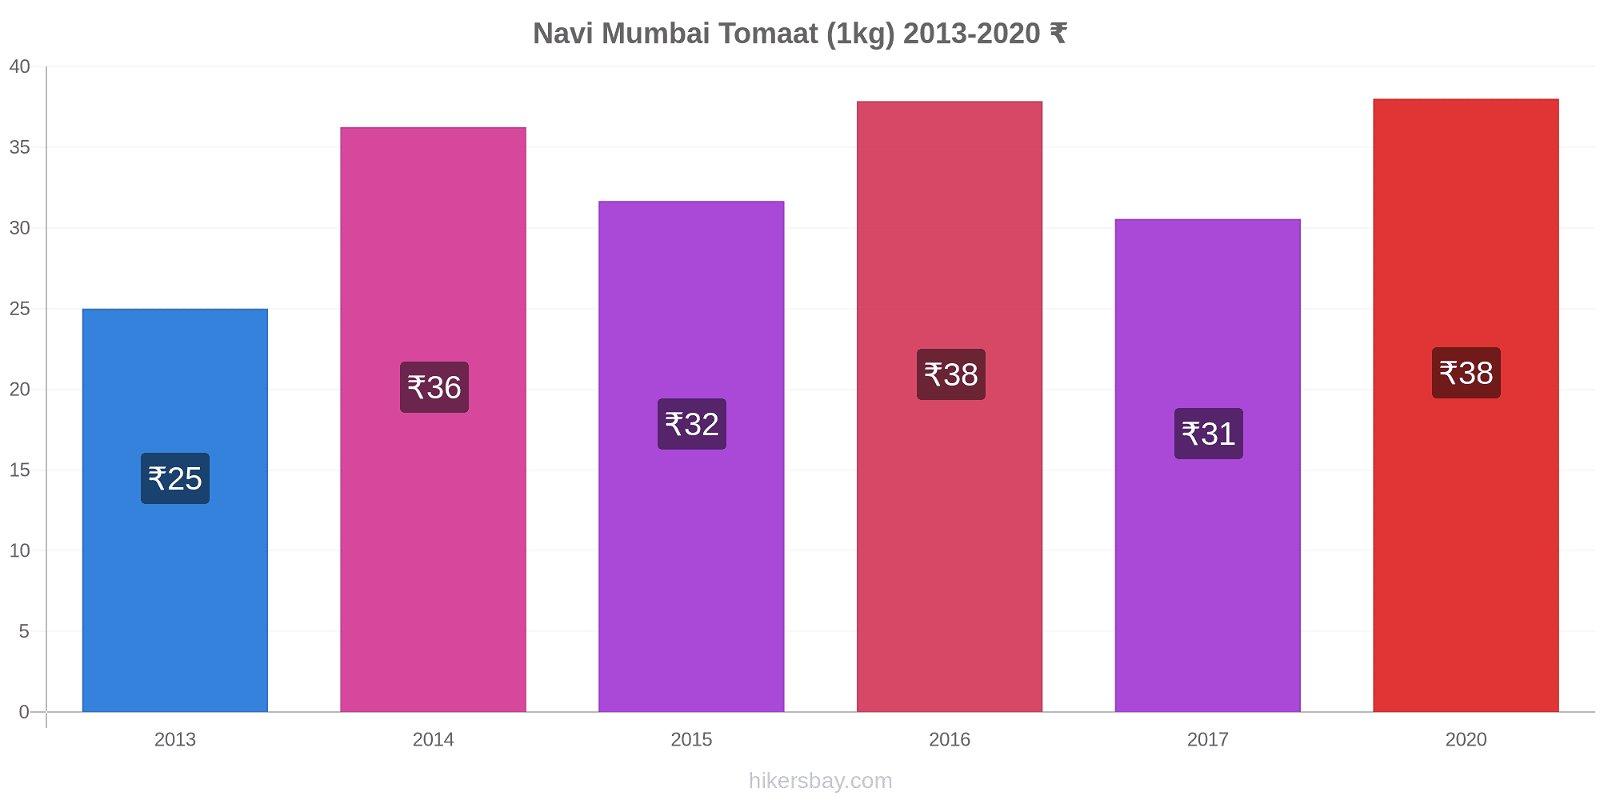 Navi Mumbai prijswijzigingen Tomaat (1kg) hikersbay.com